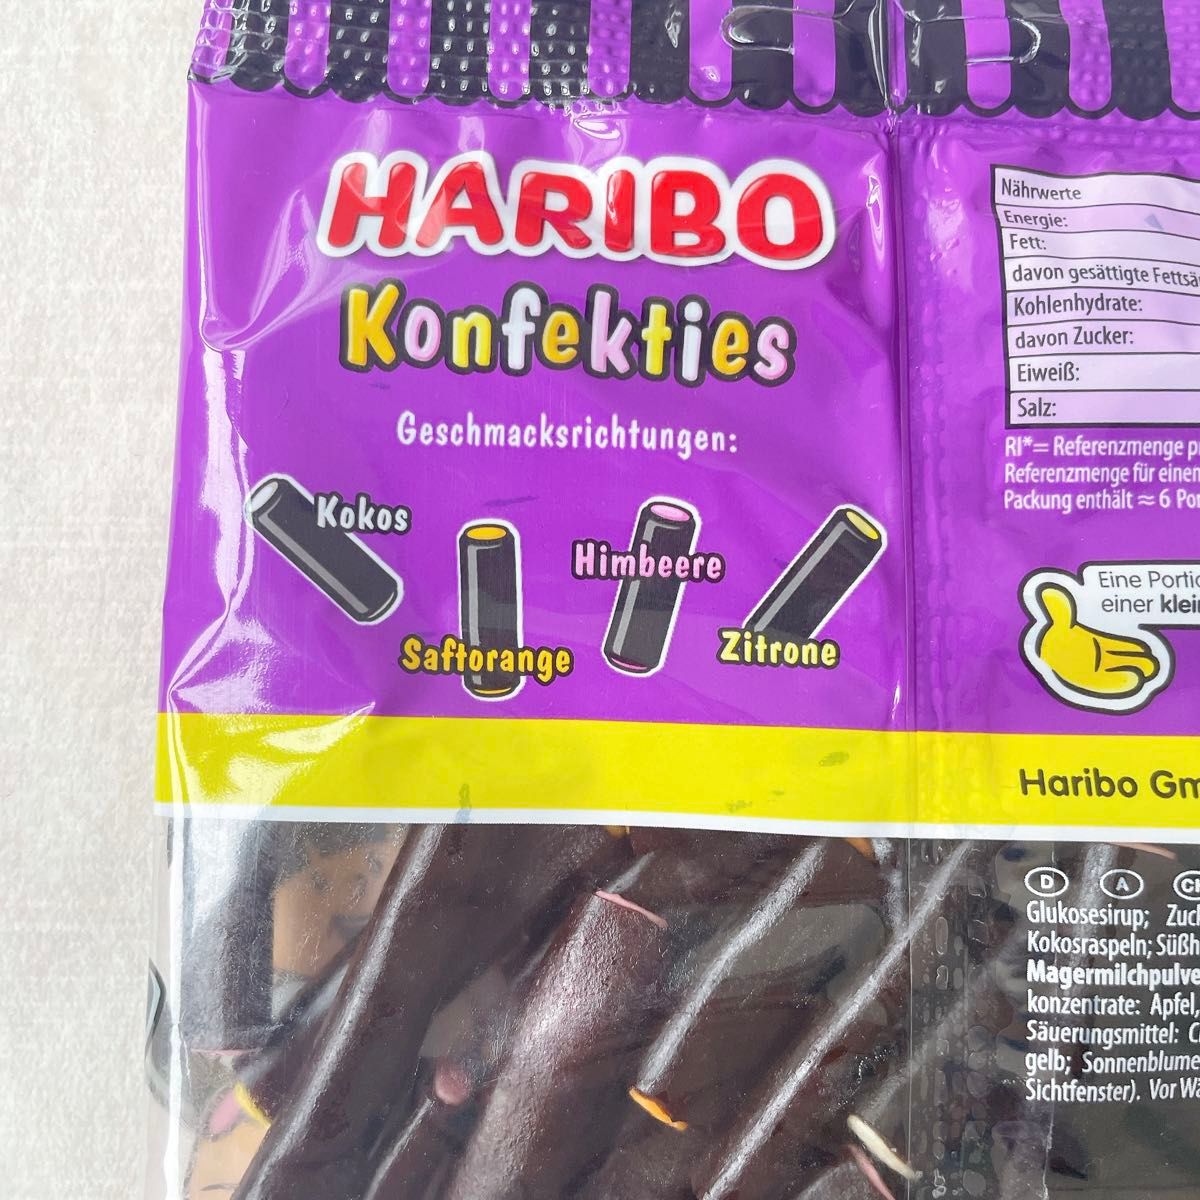 HARIBO【日本未販売】konfekties 160gリコリスソフトキャンディ